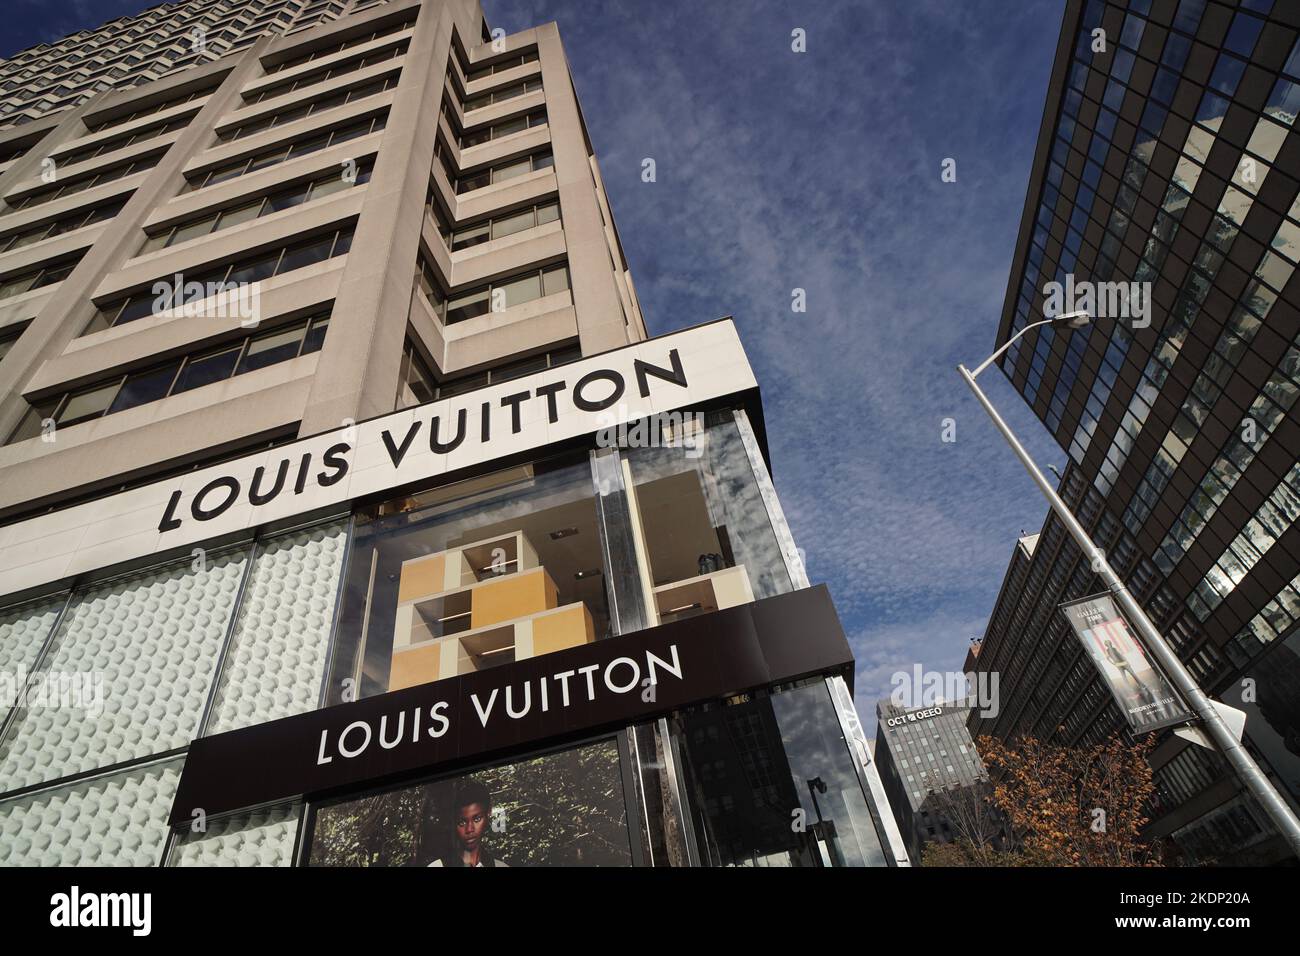 Louis Vuitton retail store sign on Bloor Street, Toronto, Ontario, Canada Stock Photo